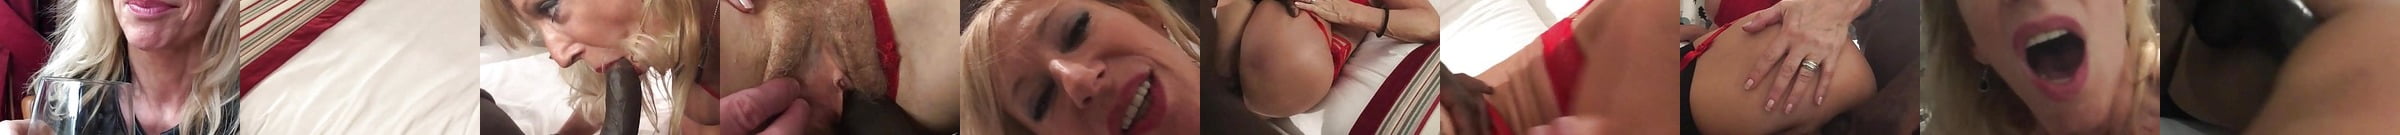 Marina Beaulieu Free Porn Star Videos 48 Xhamster